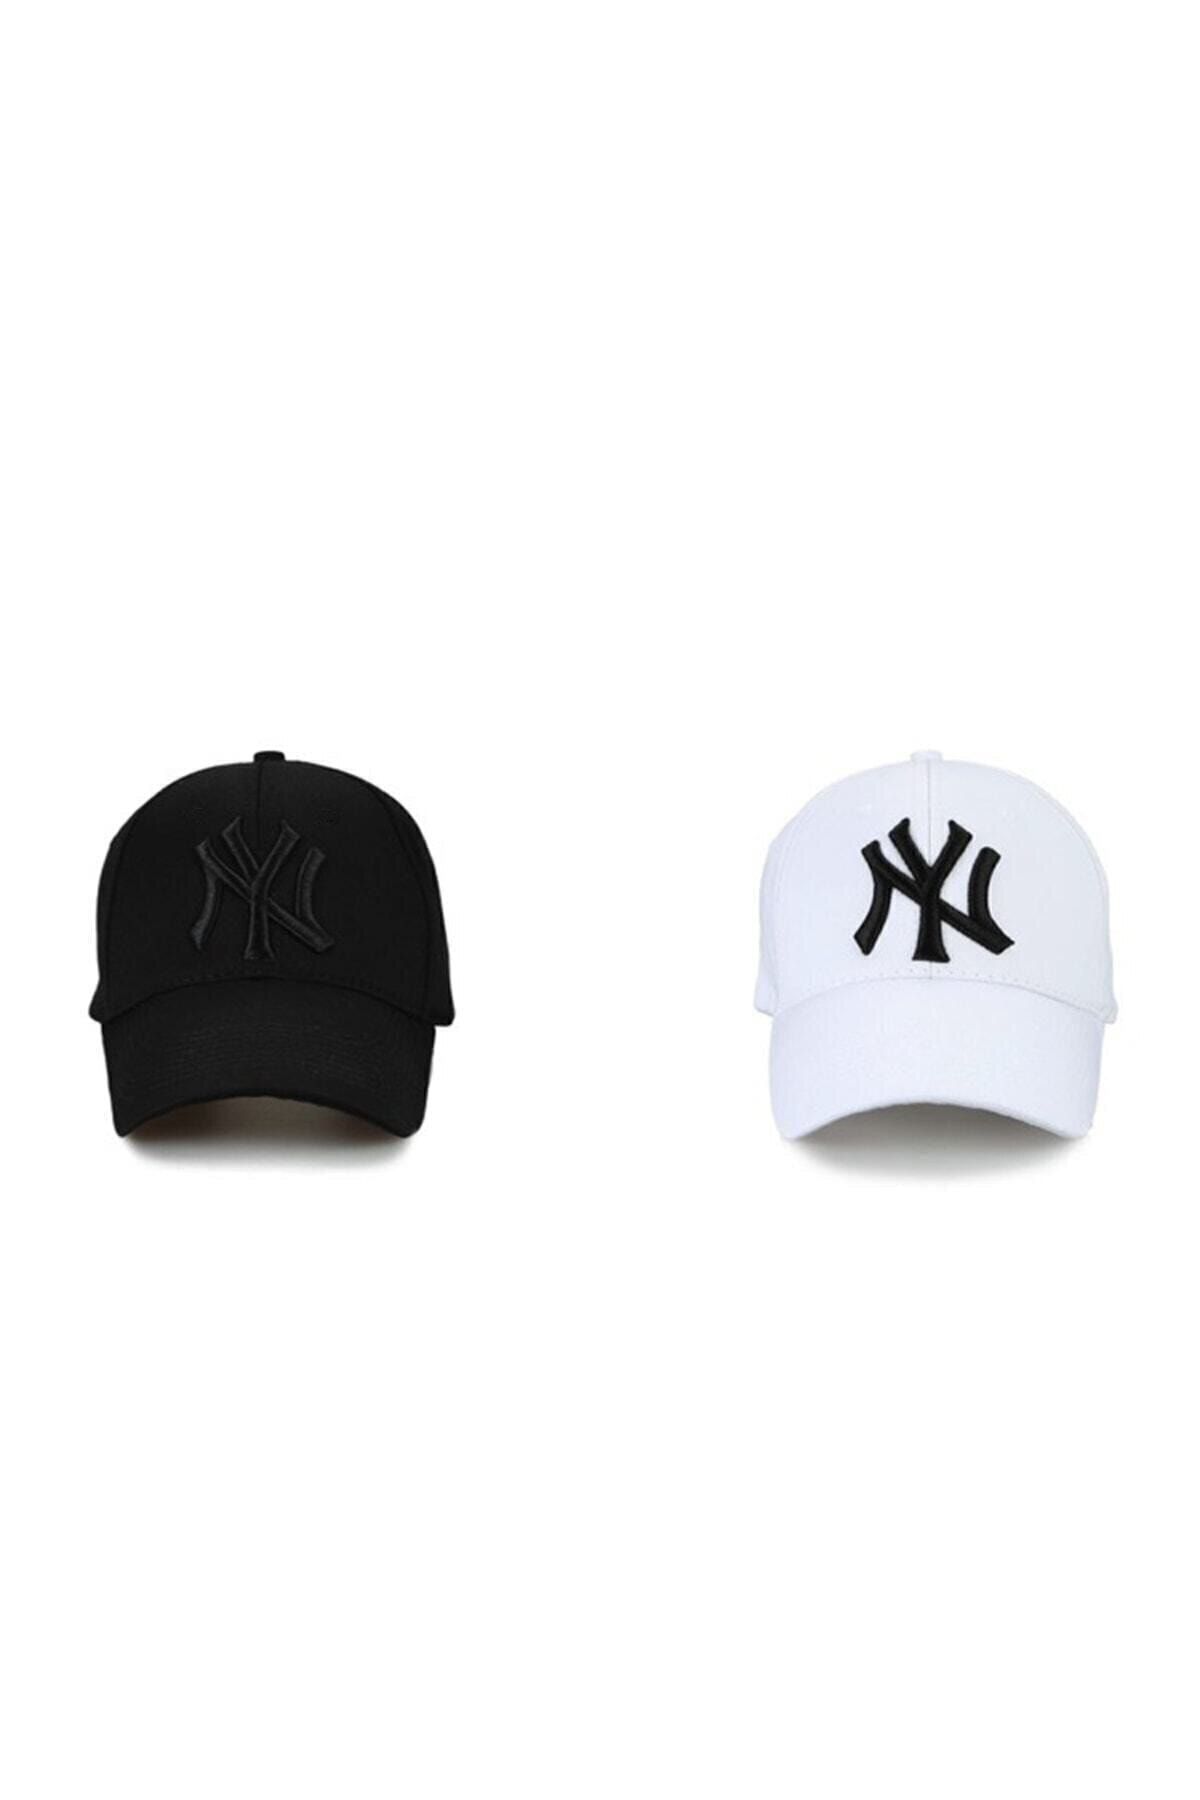 NuxFah Ny New York Şapka Unisex Siyah Şapka 2'li Ikili Set